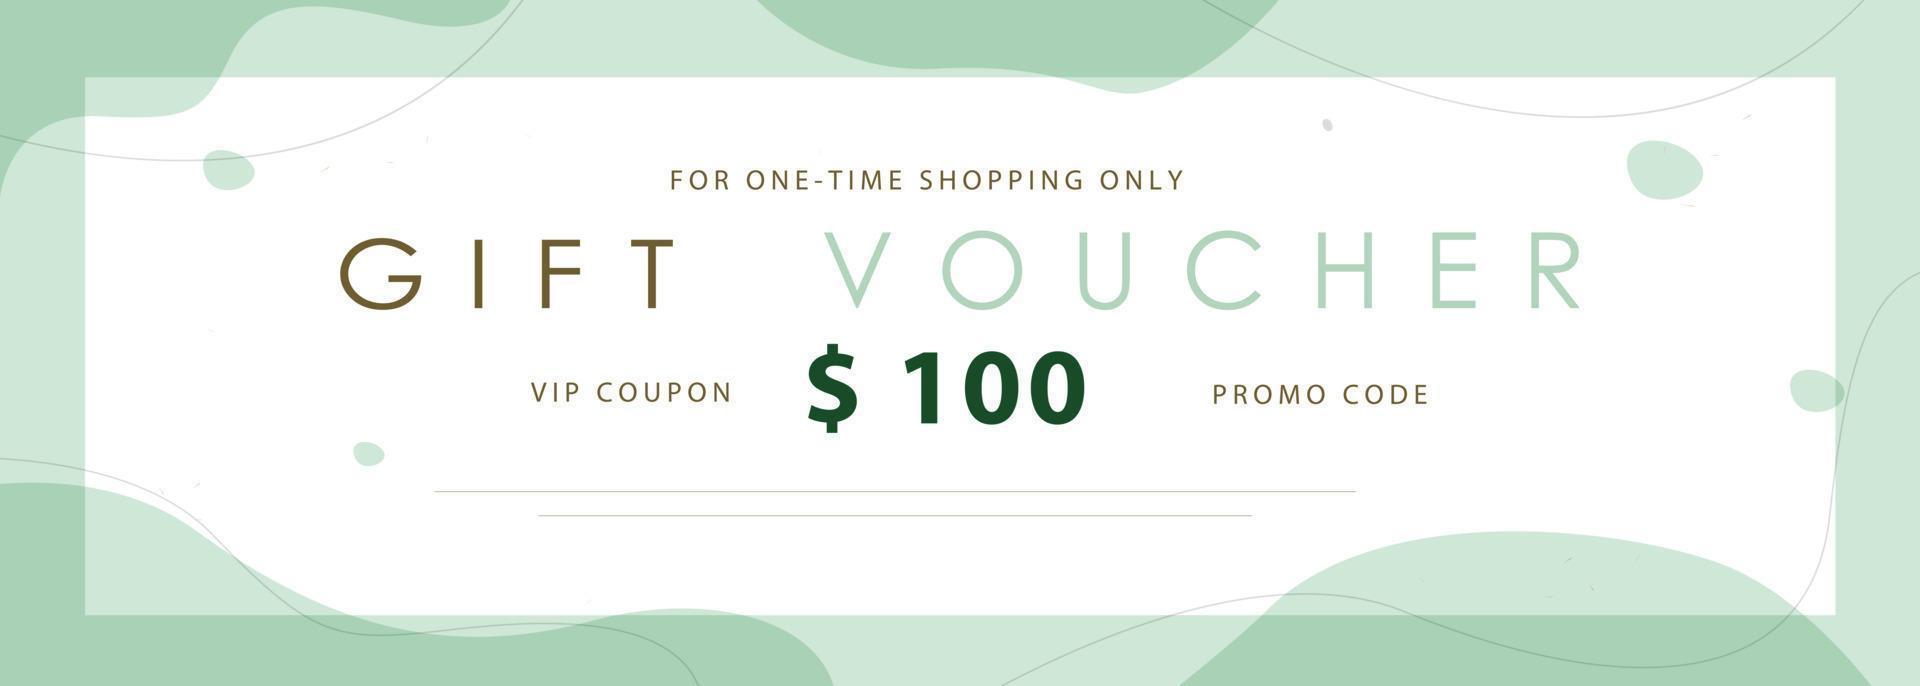 Voucher gift design for coupon template or invitation. background vector illustration